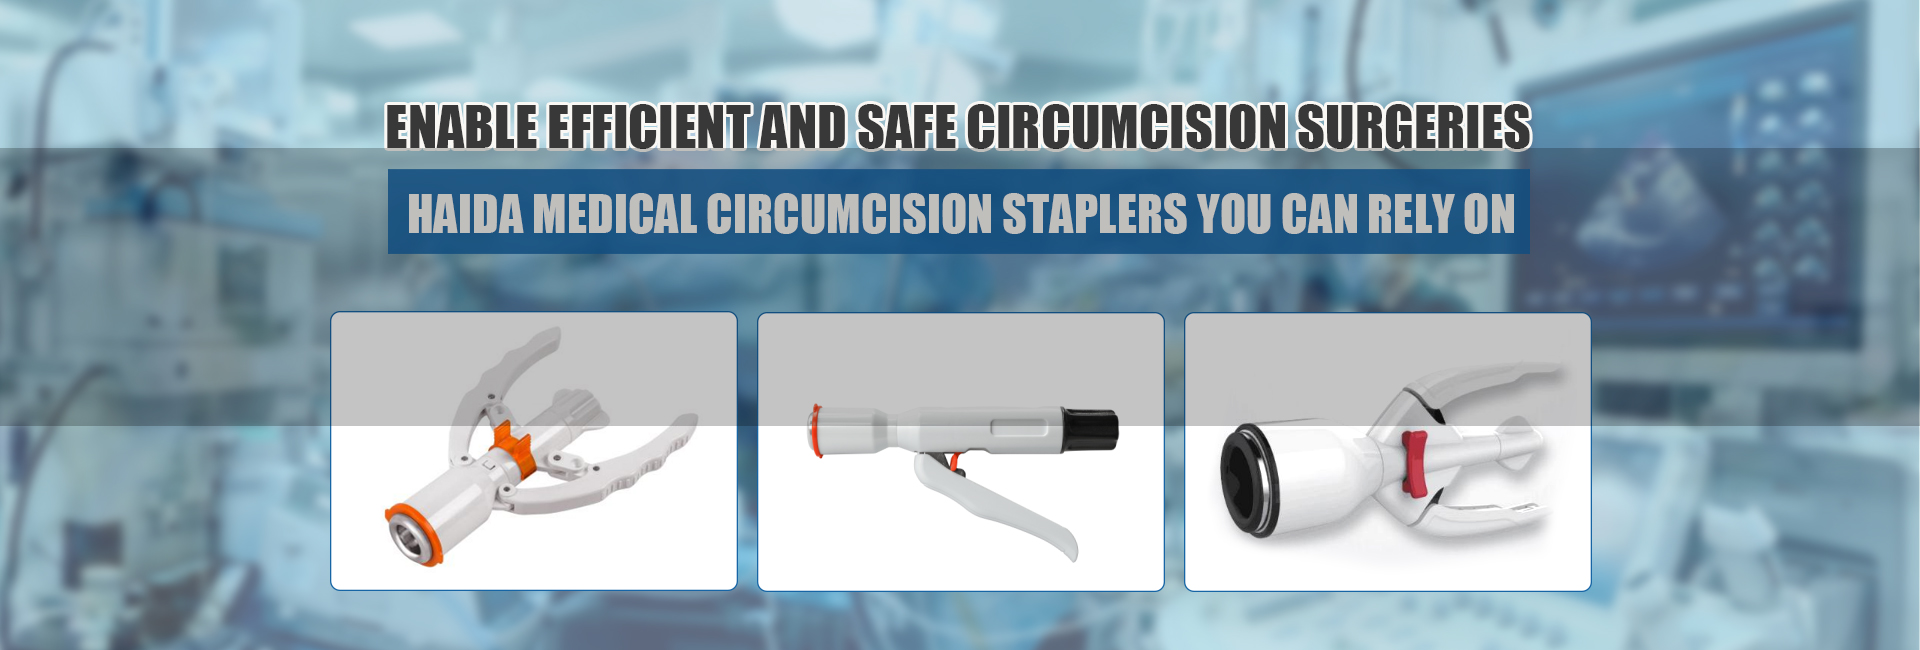 Circumcision devices